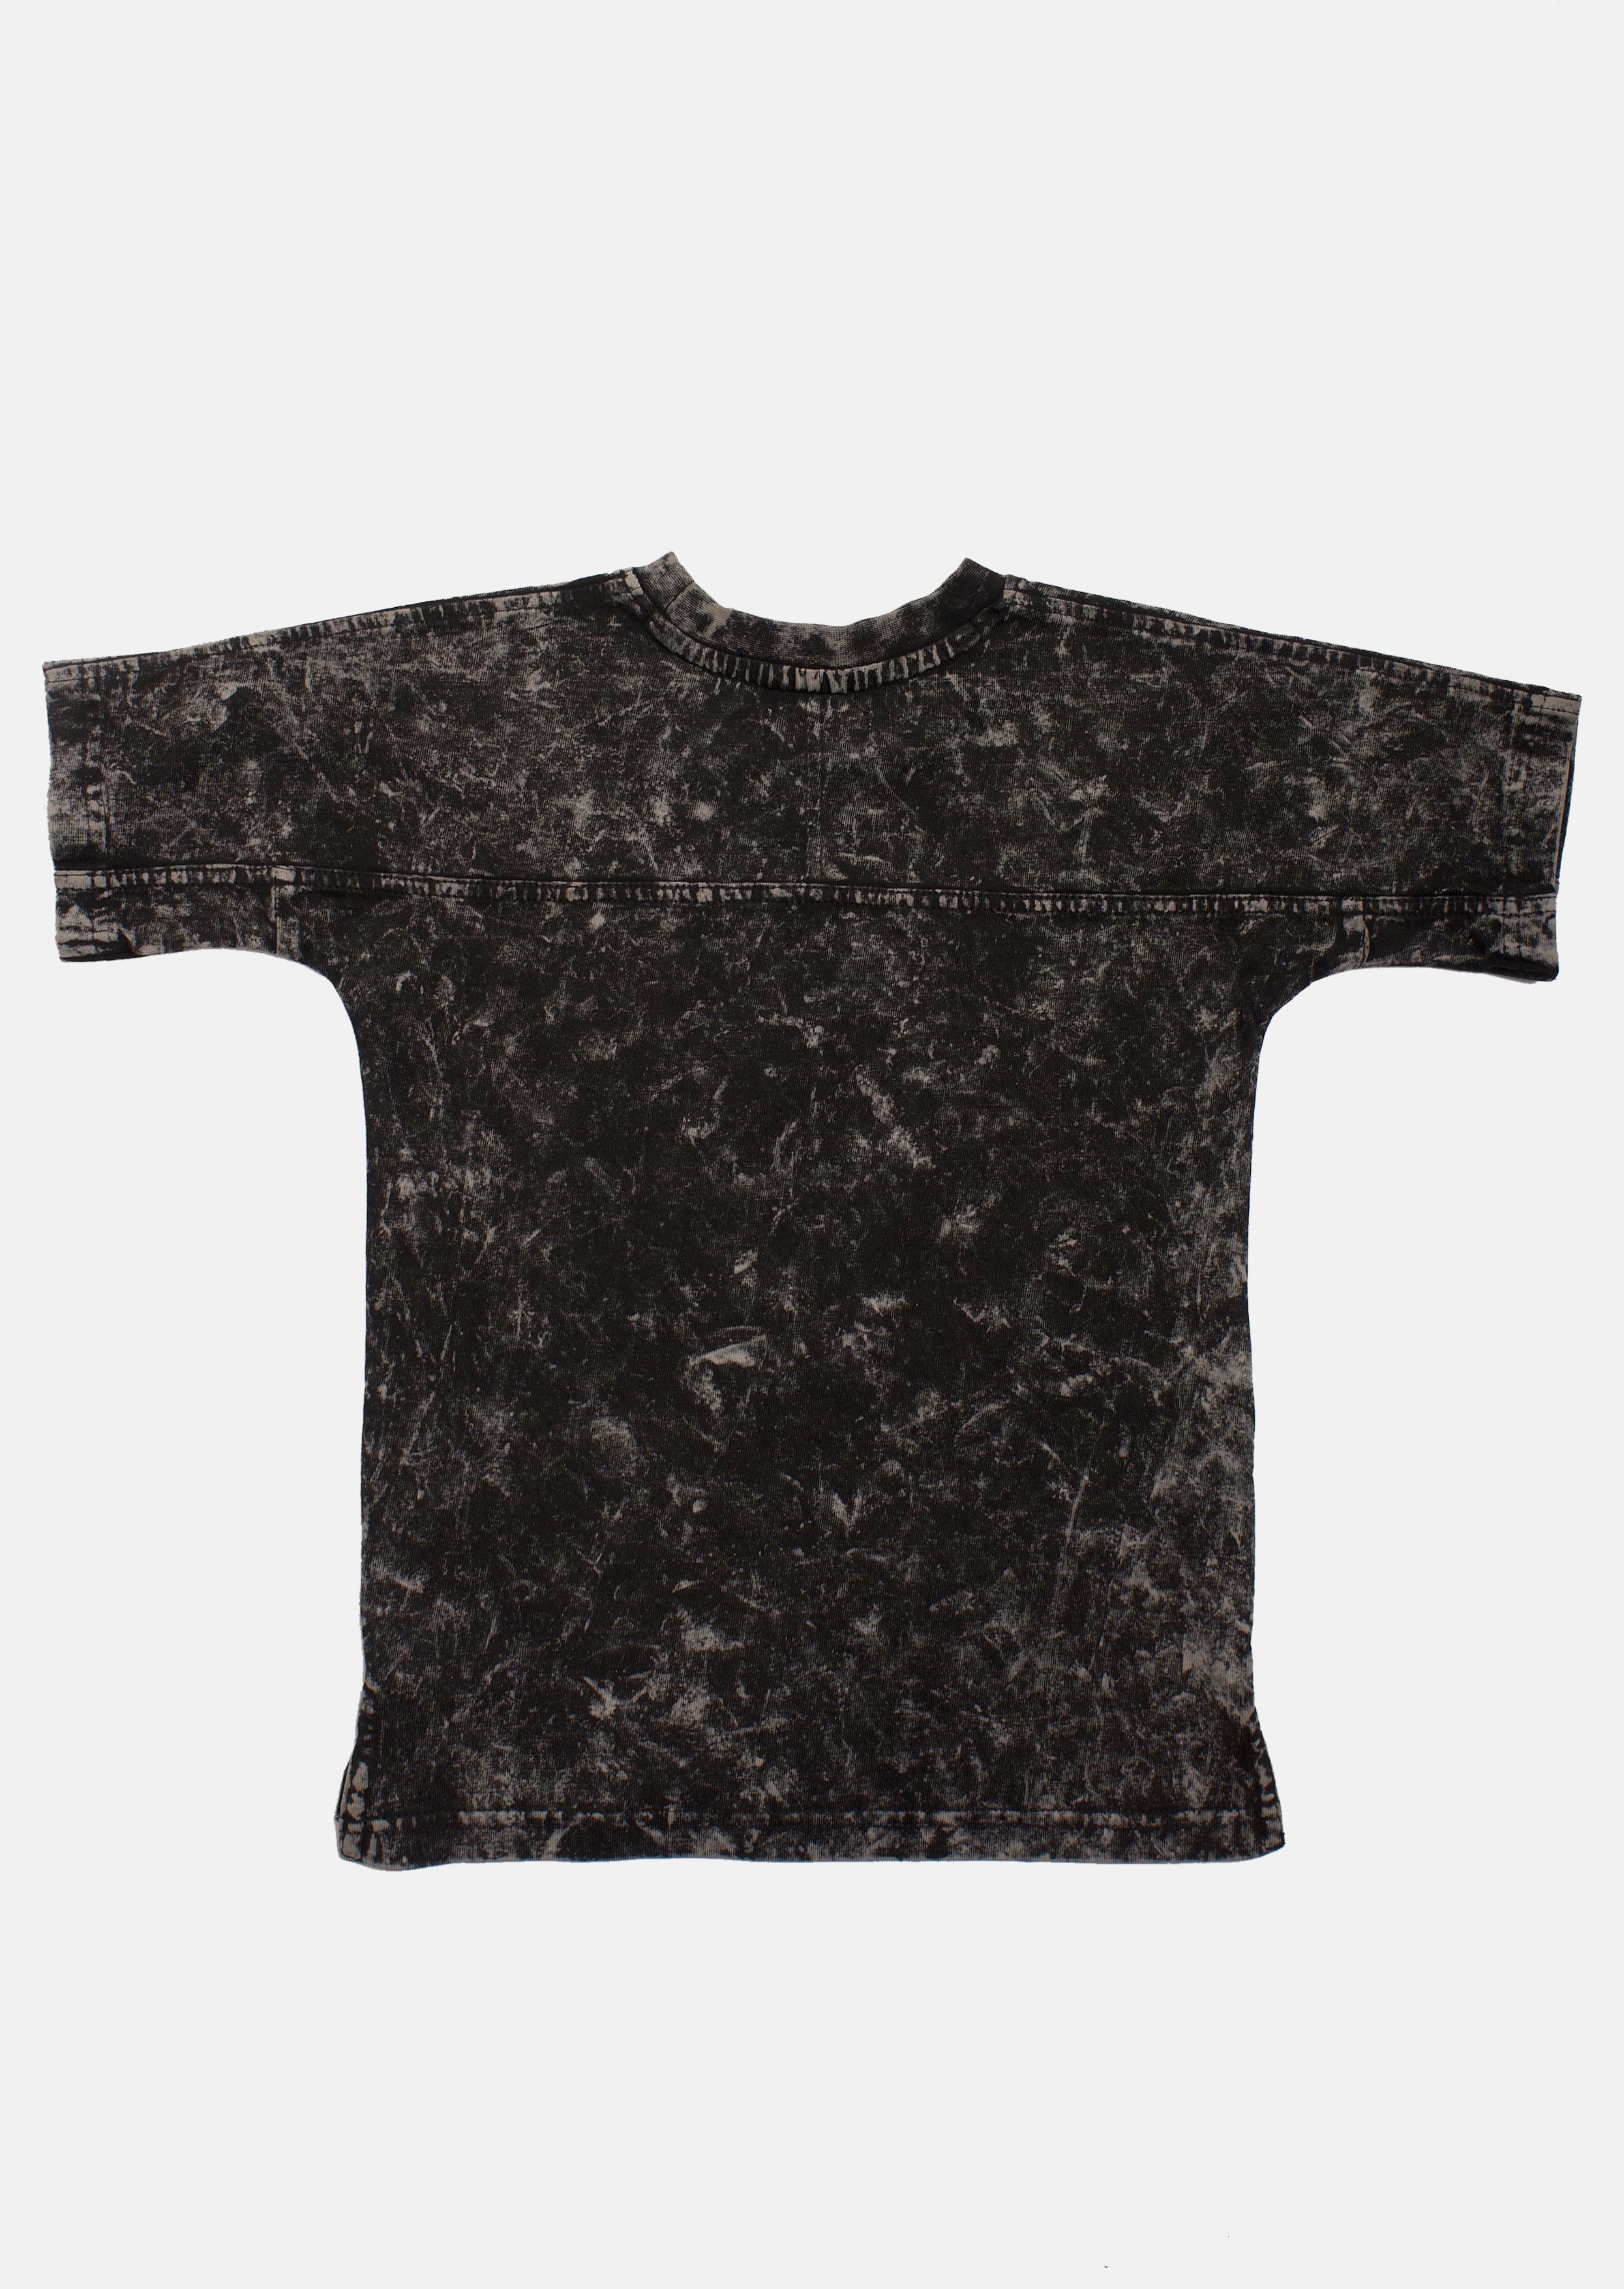 Boys Acid Wash Round Neck Black T-Shirt